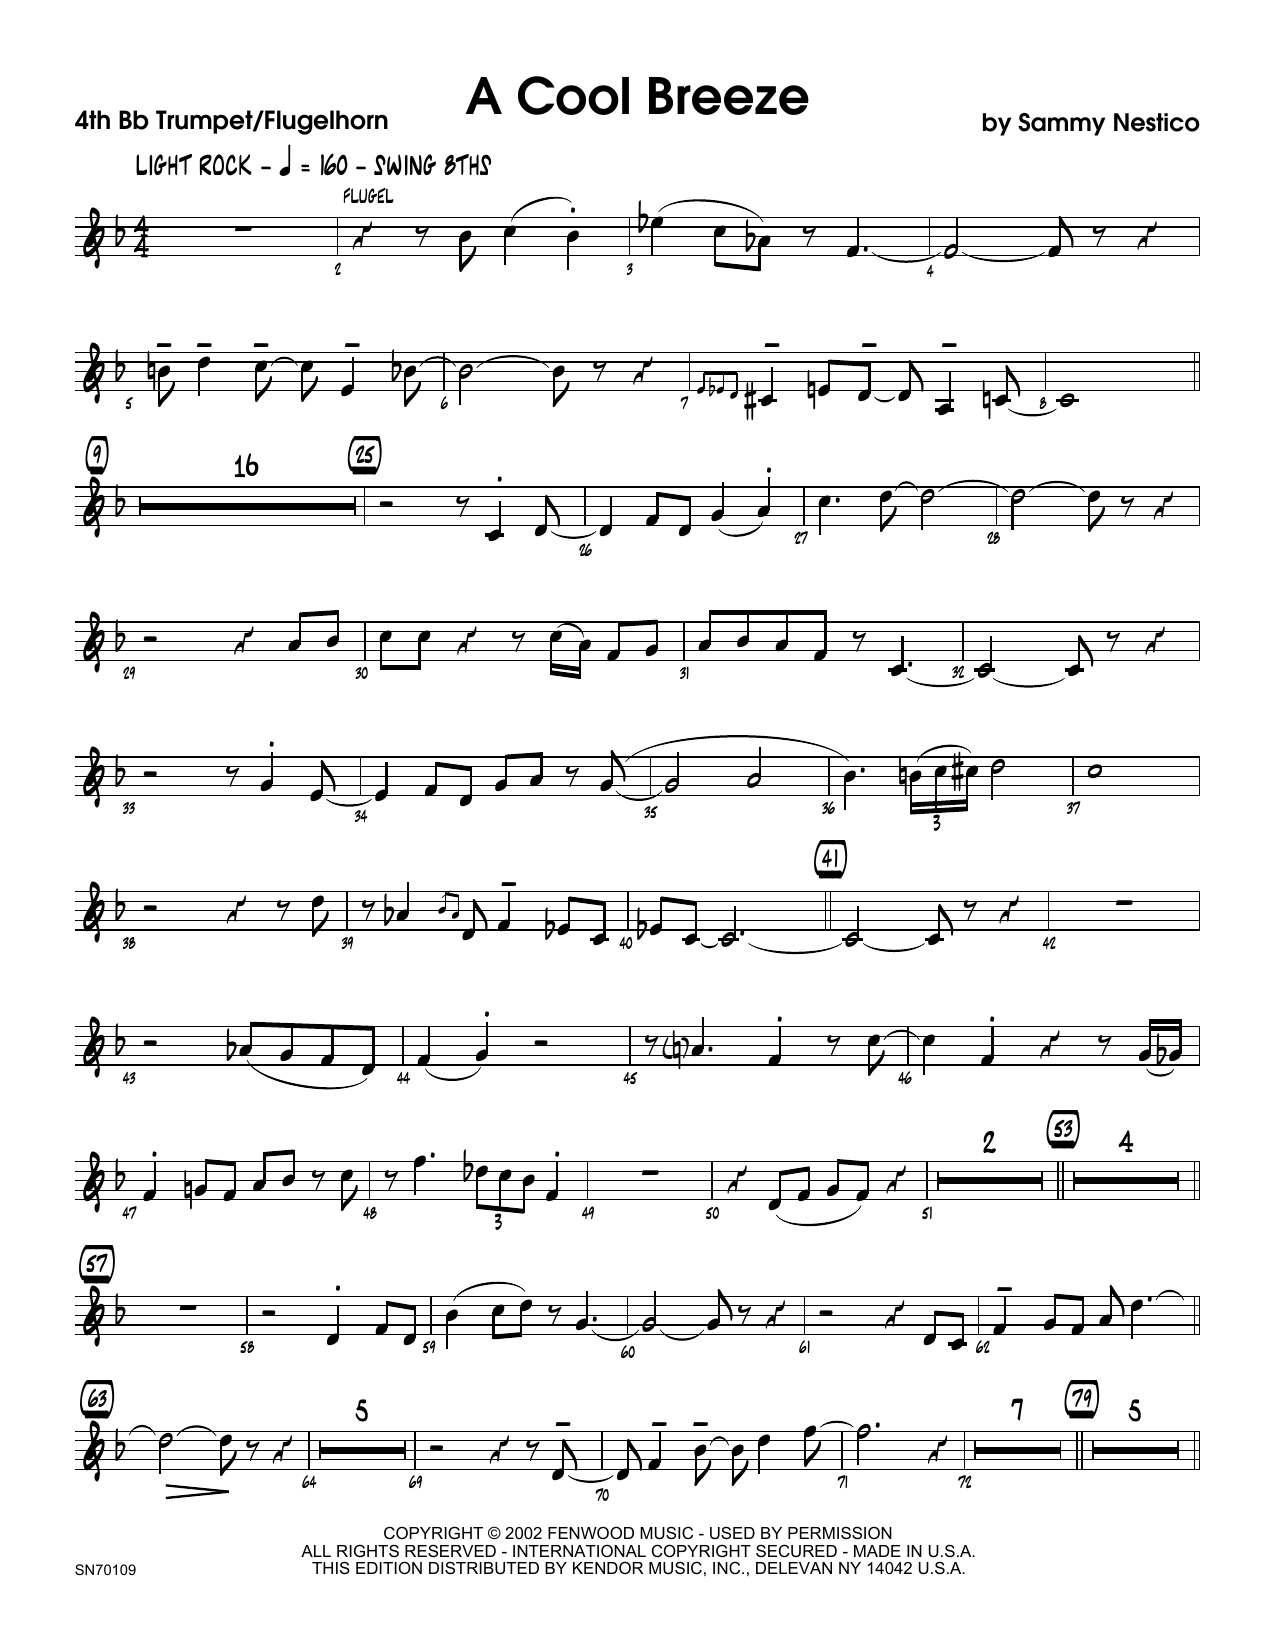 Download Sammy Nestico A Cool Breeze - 4th Bb Trumpet Sheet Music